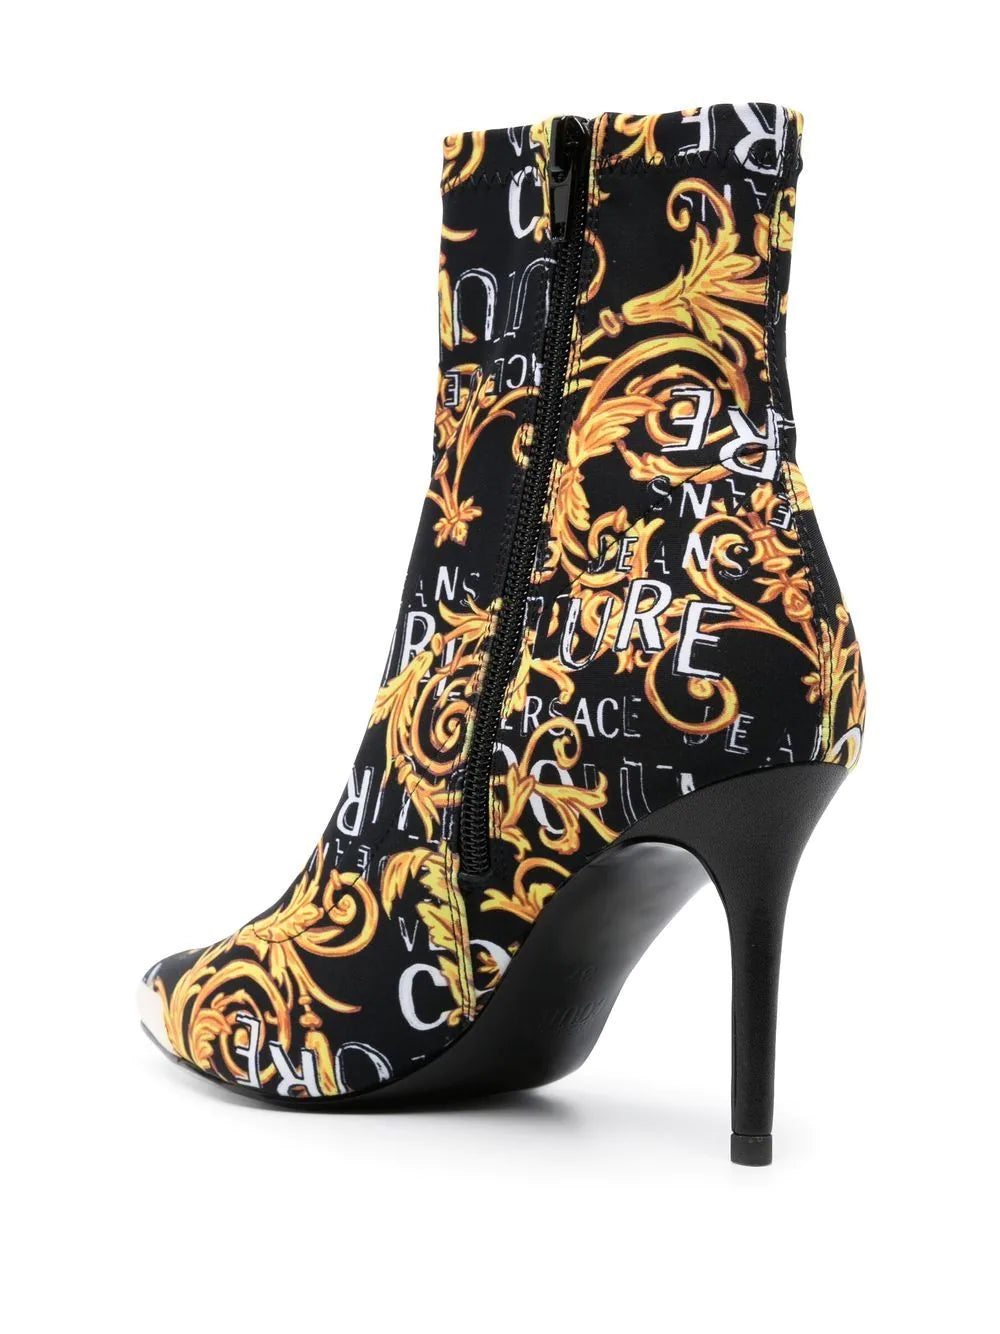 VERSACE WOMEN Baroque Logo Print Scarlett 85mm Heel Boots Black/Gold - MAISONDEFASHION.COM